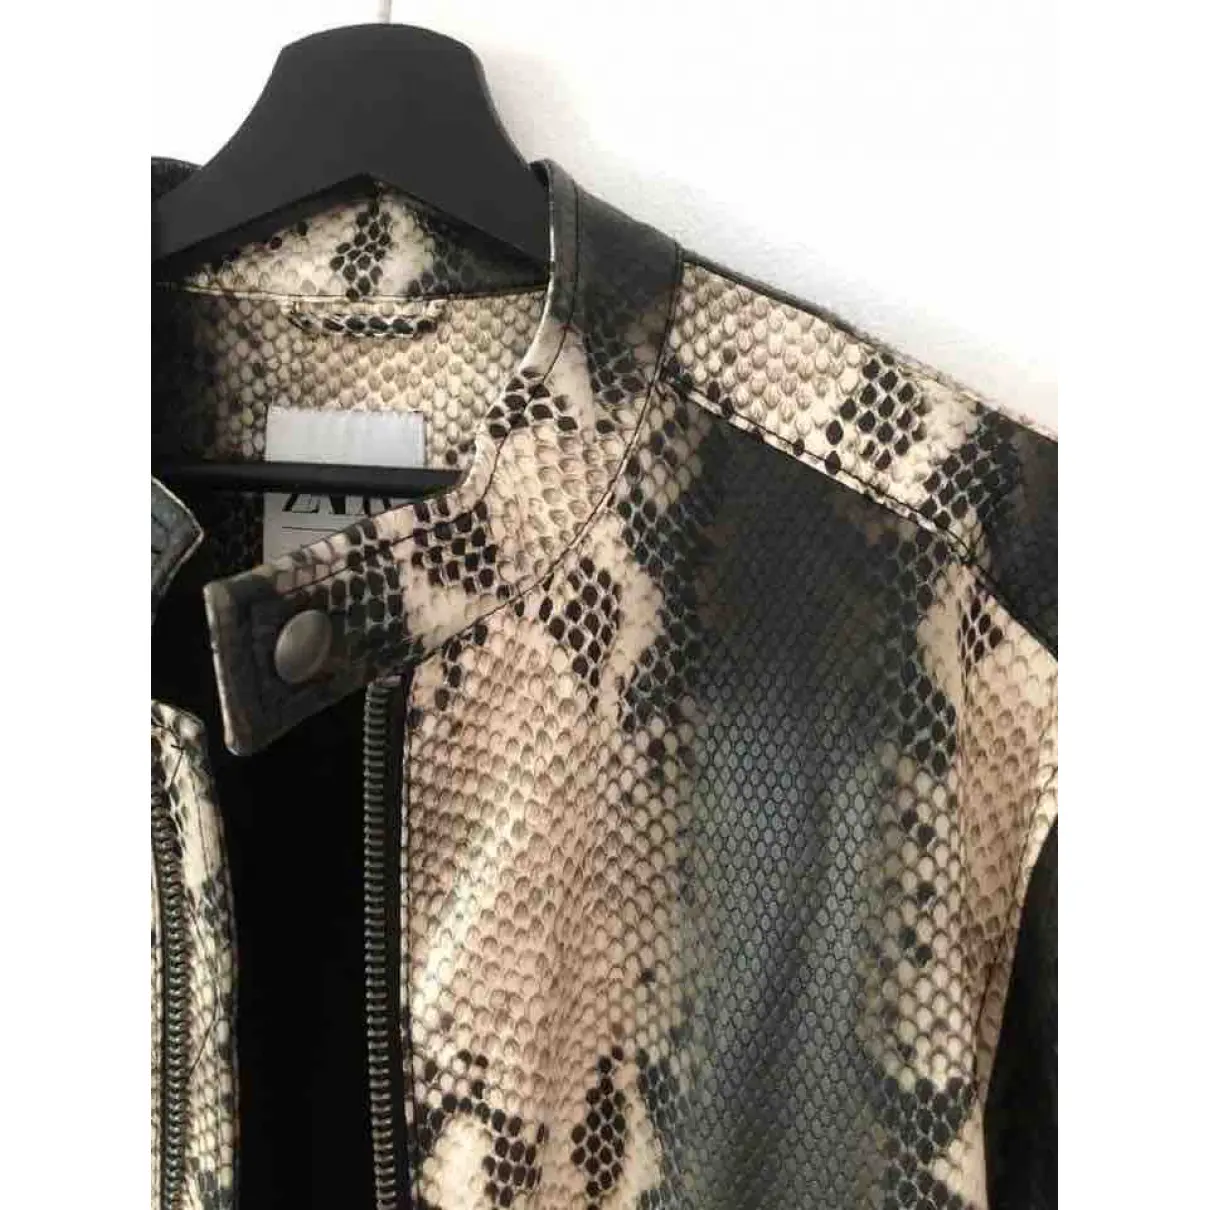 Buy Zara Vegan leather jacket online